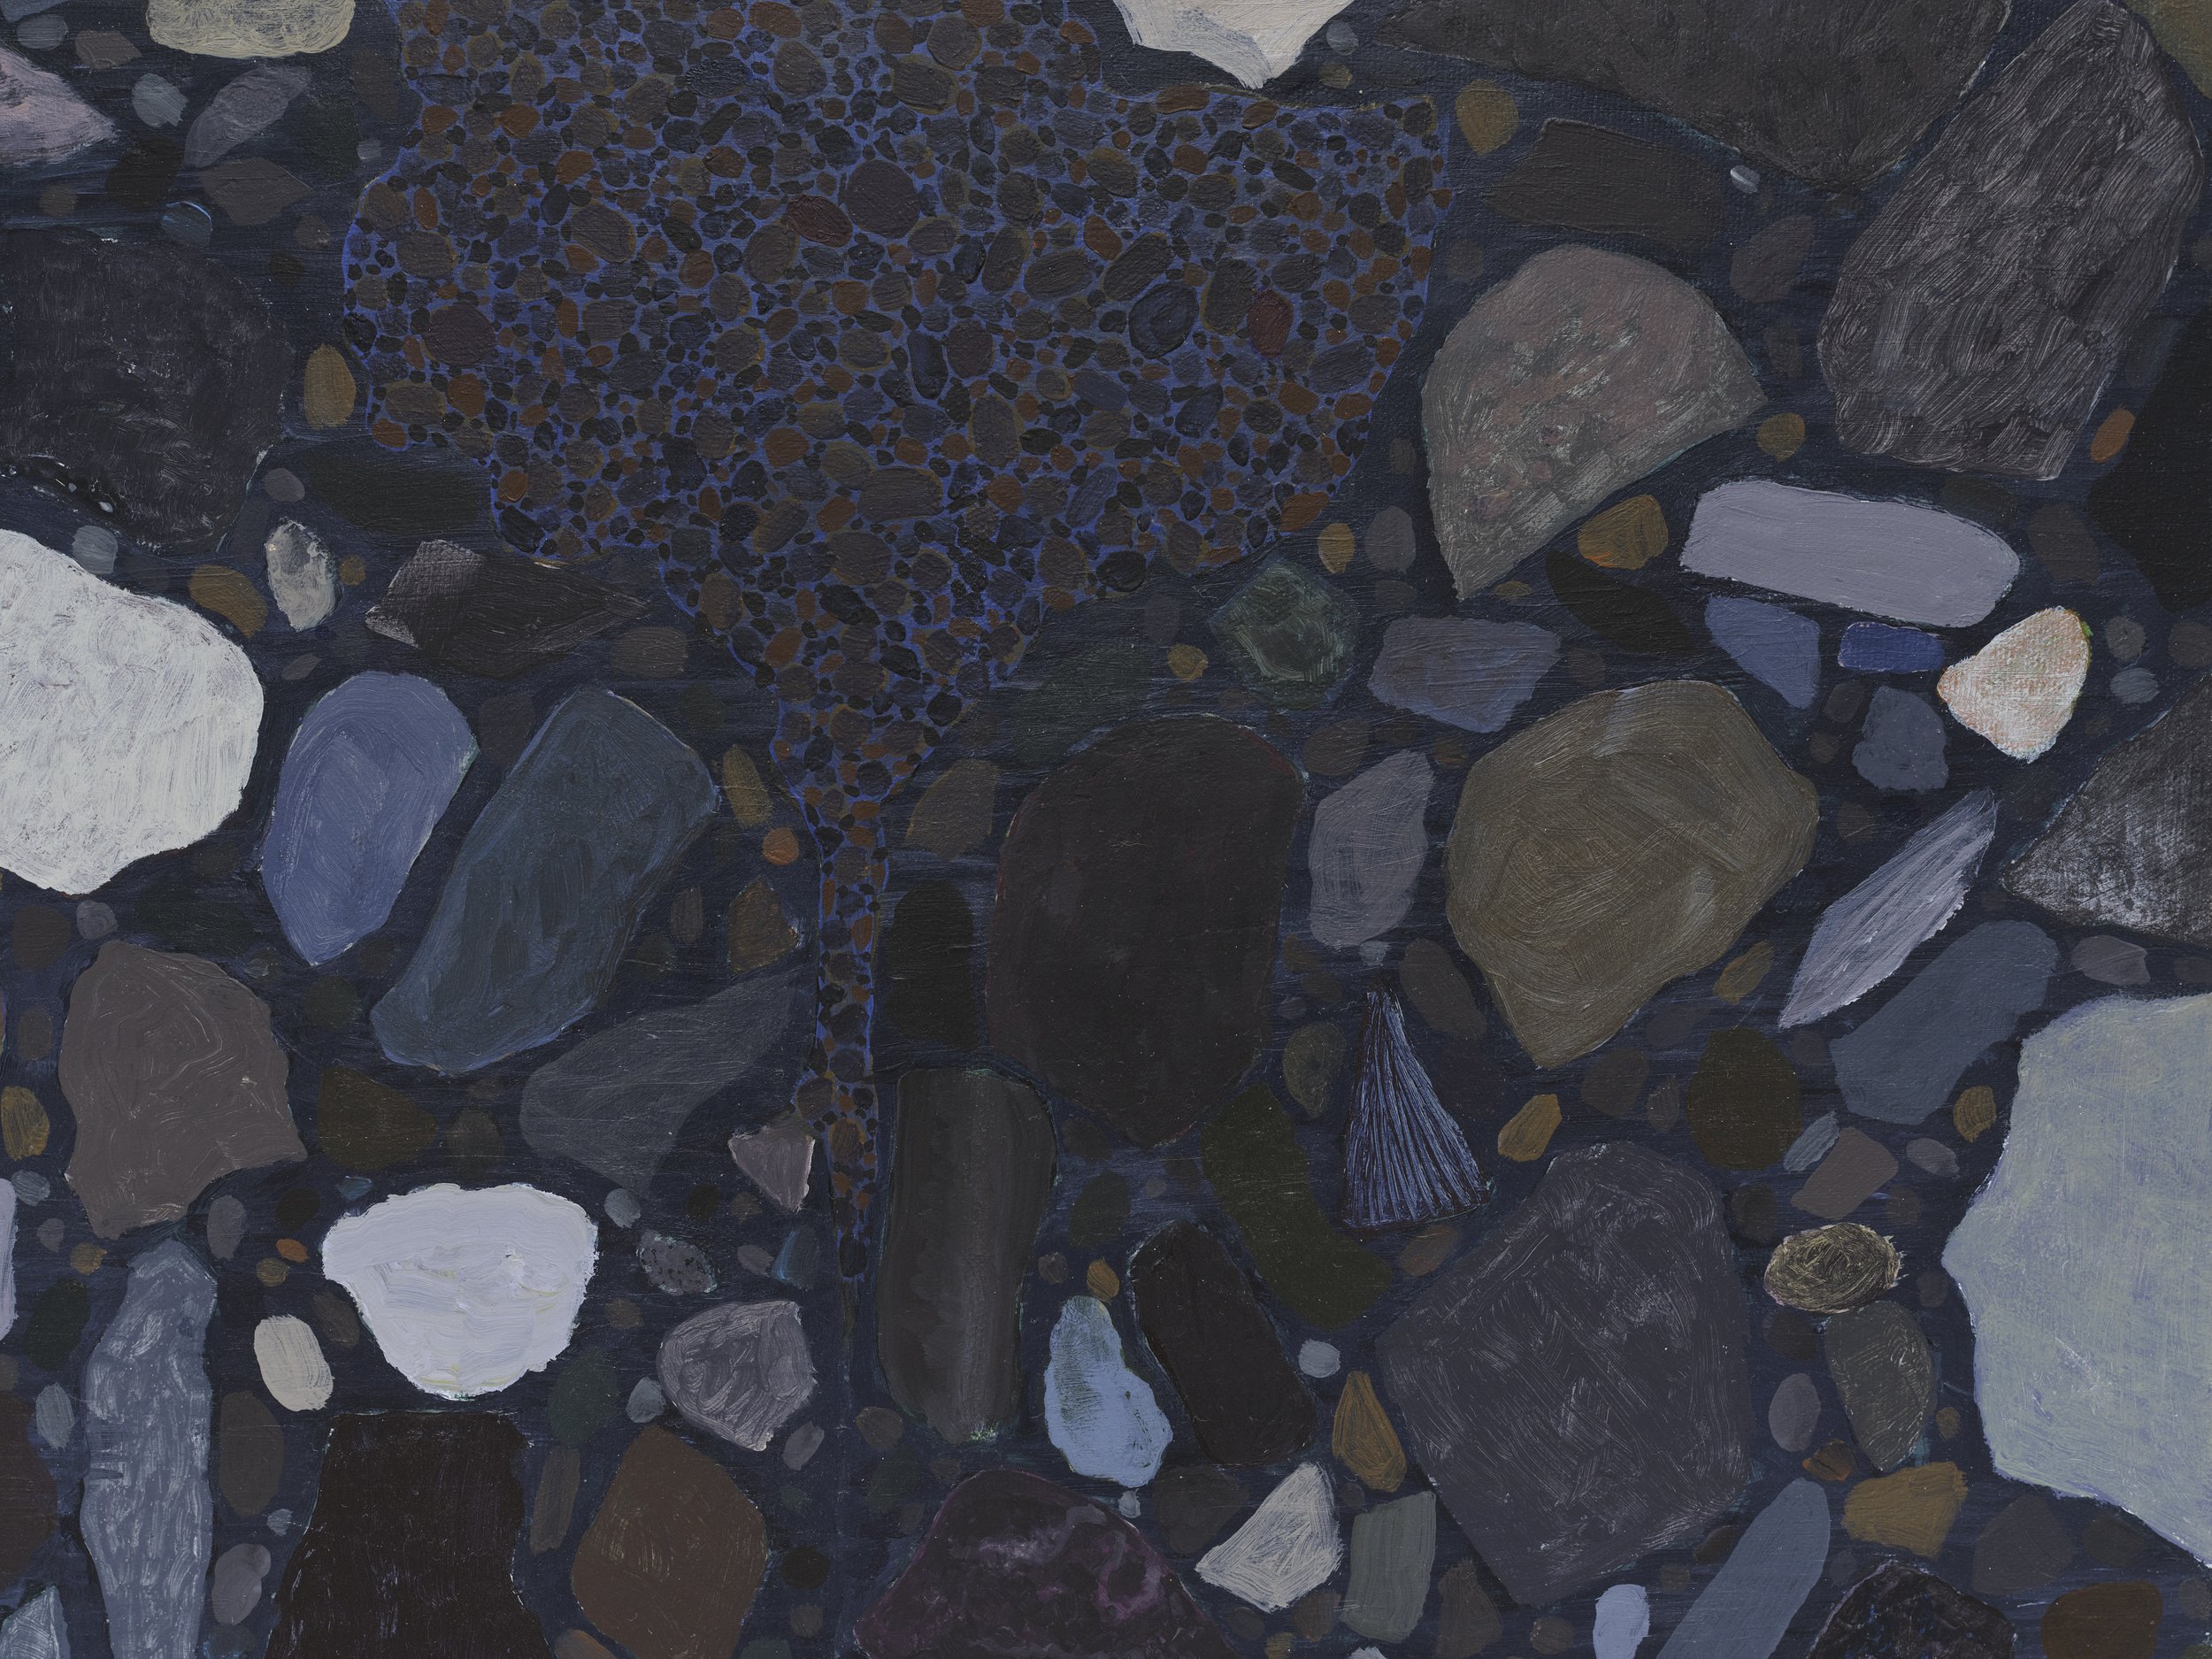   Aggregate 1  (detail), 2017  Acyrlic on Canvas  14 x 28 in. (35.6 x 45.7 cm) 